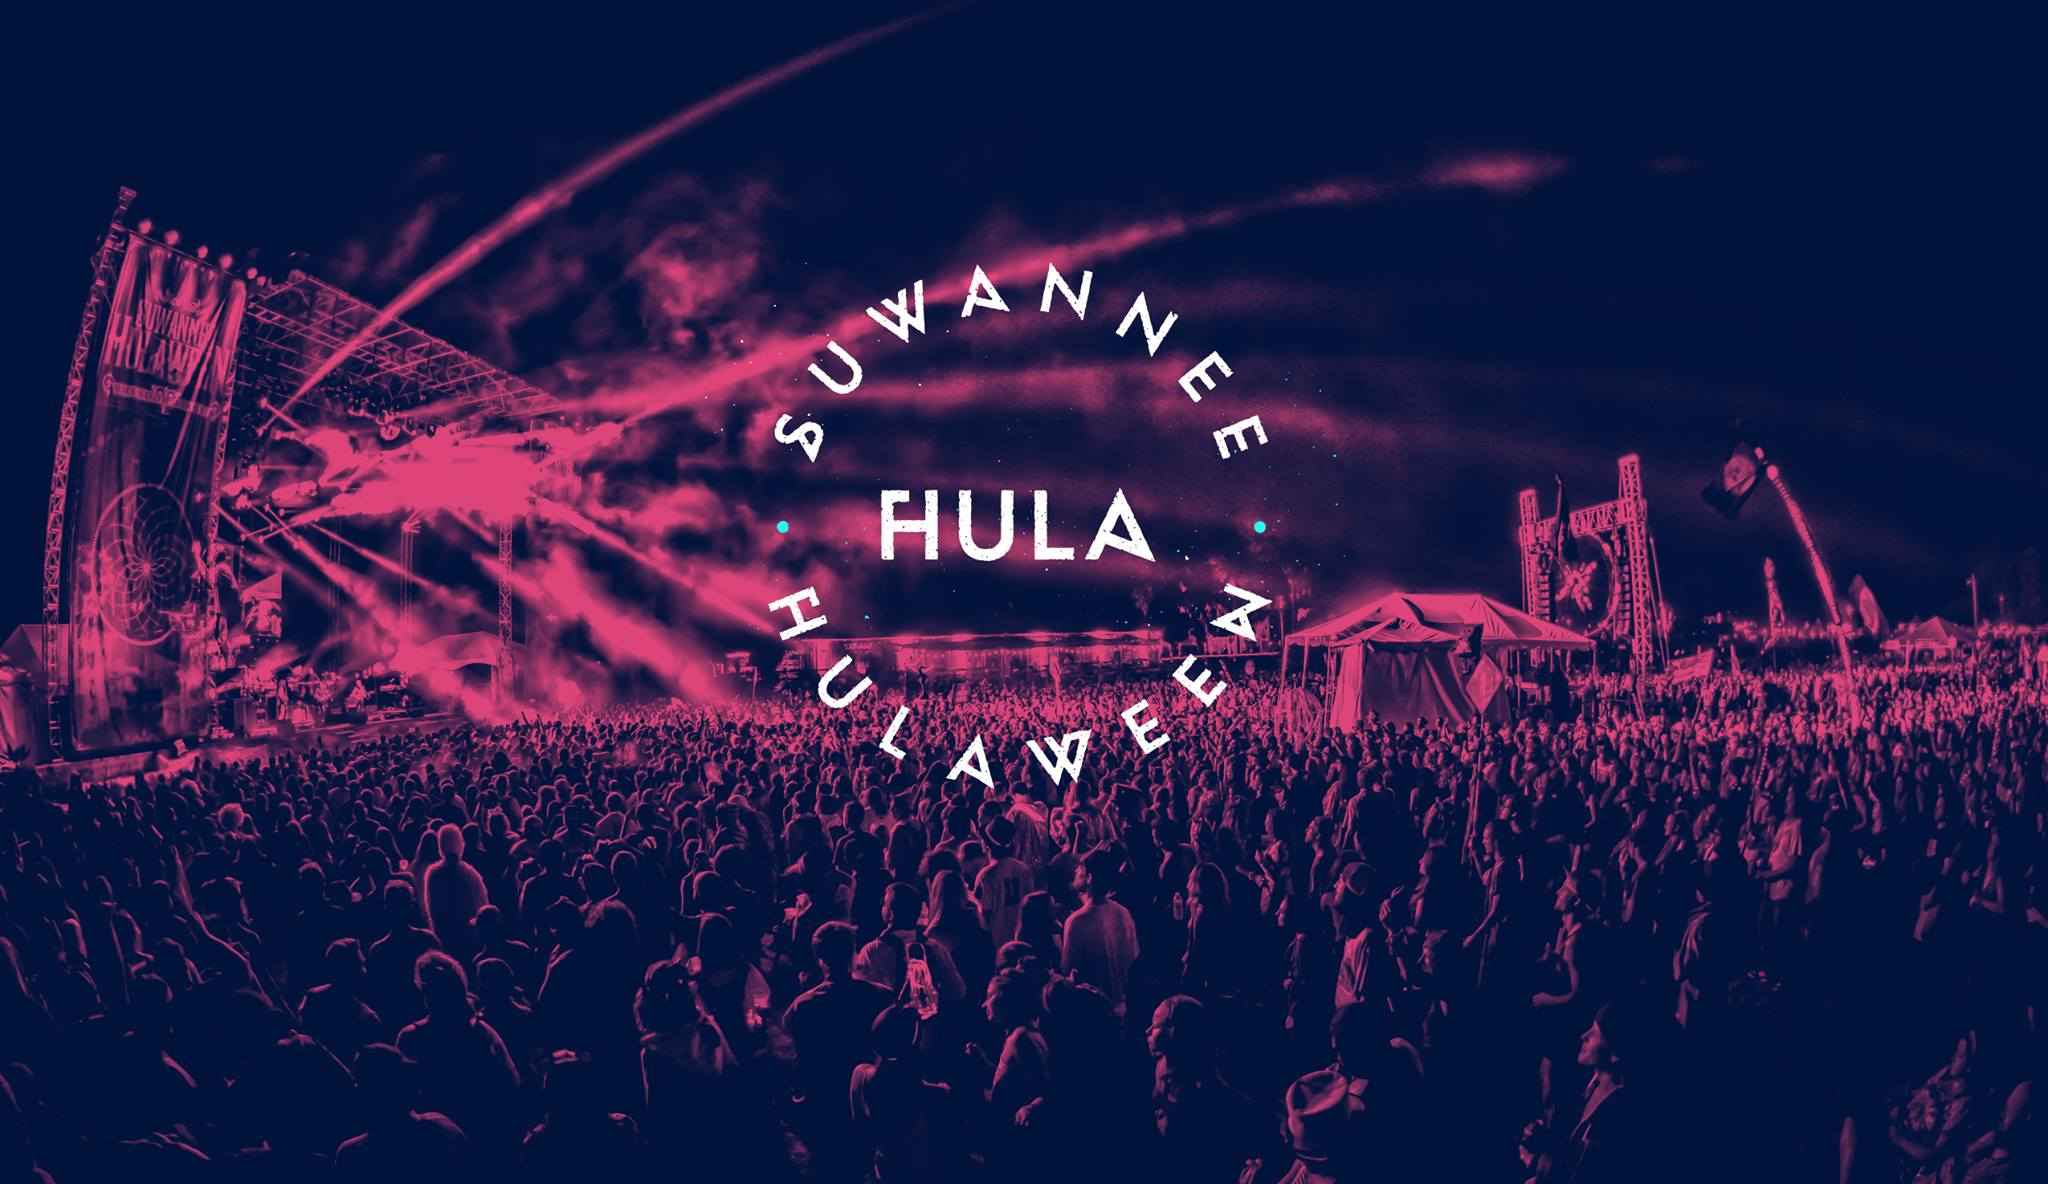 Suwannee Hulaween 2017